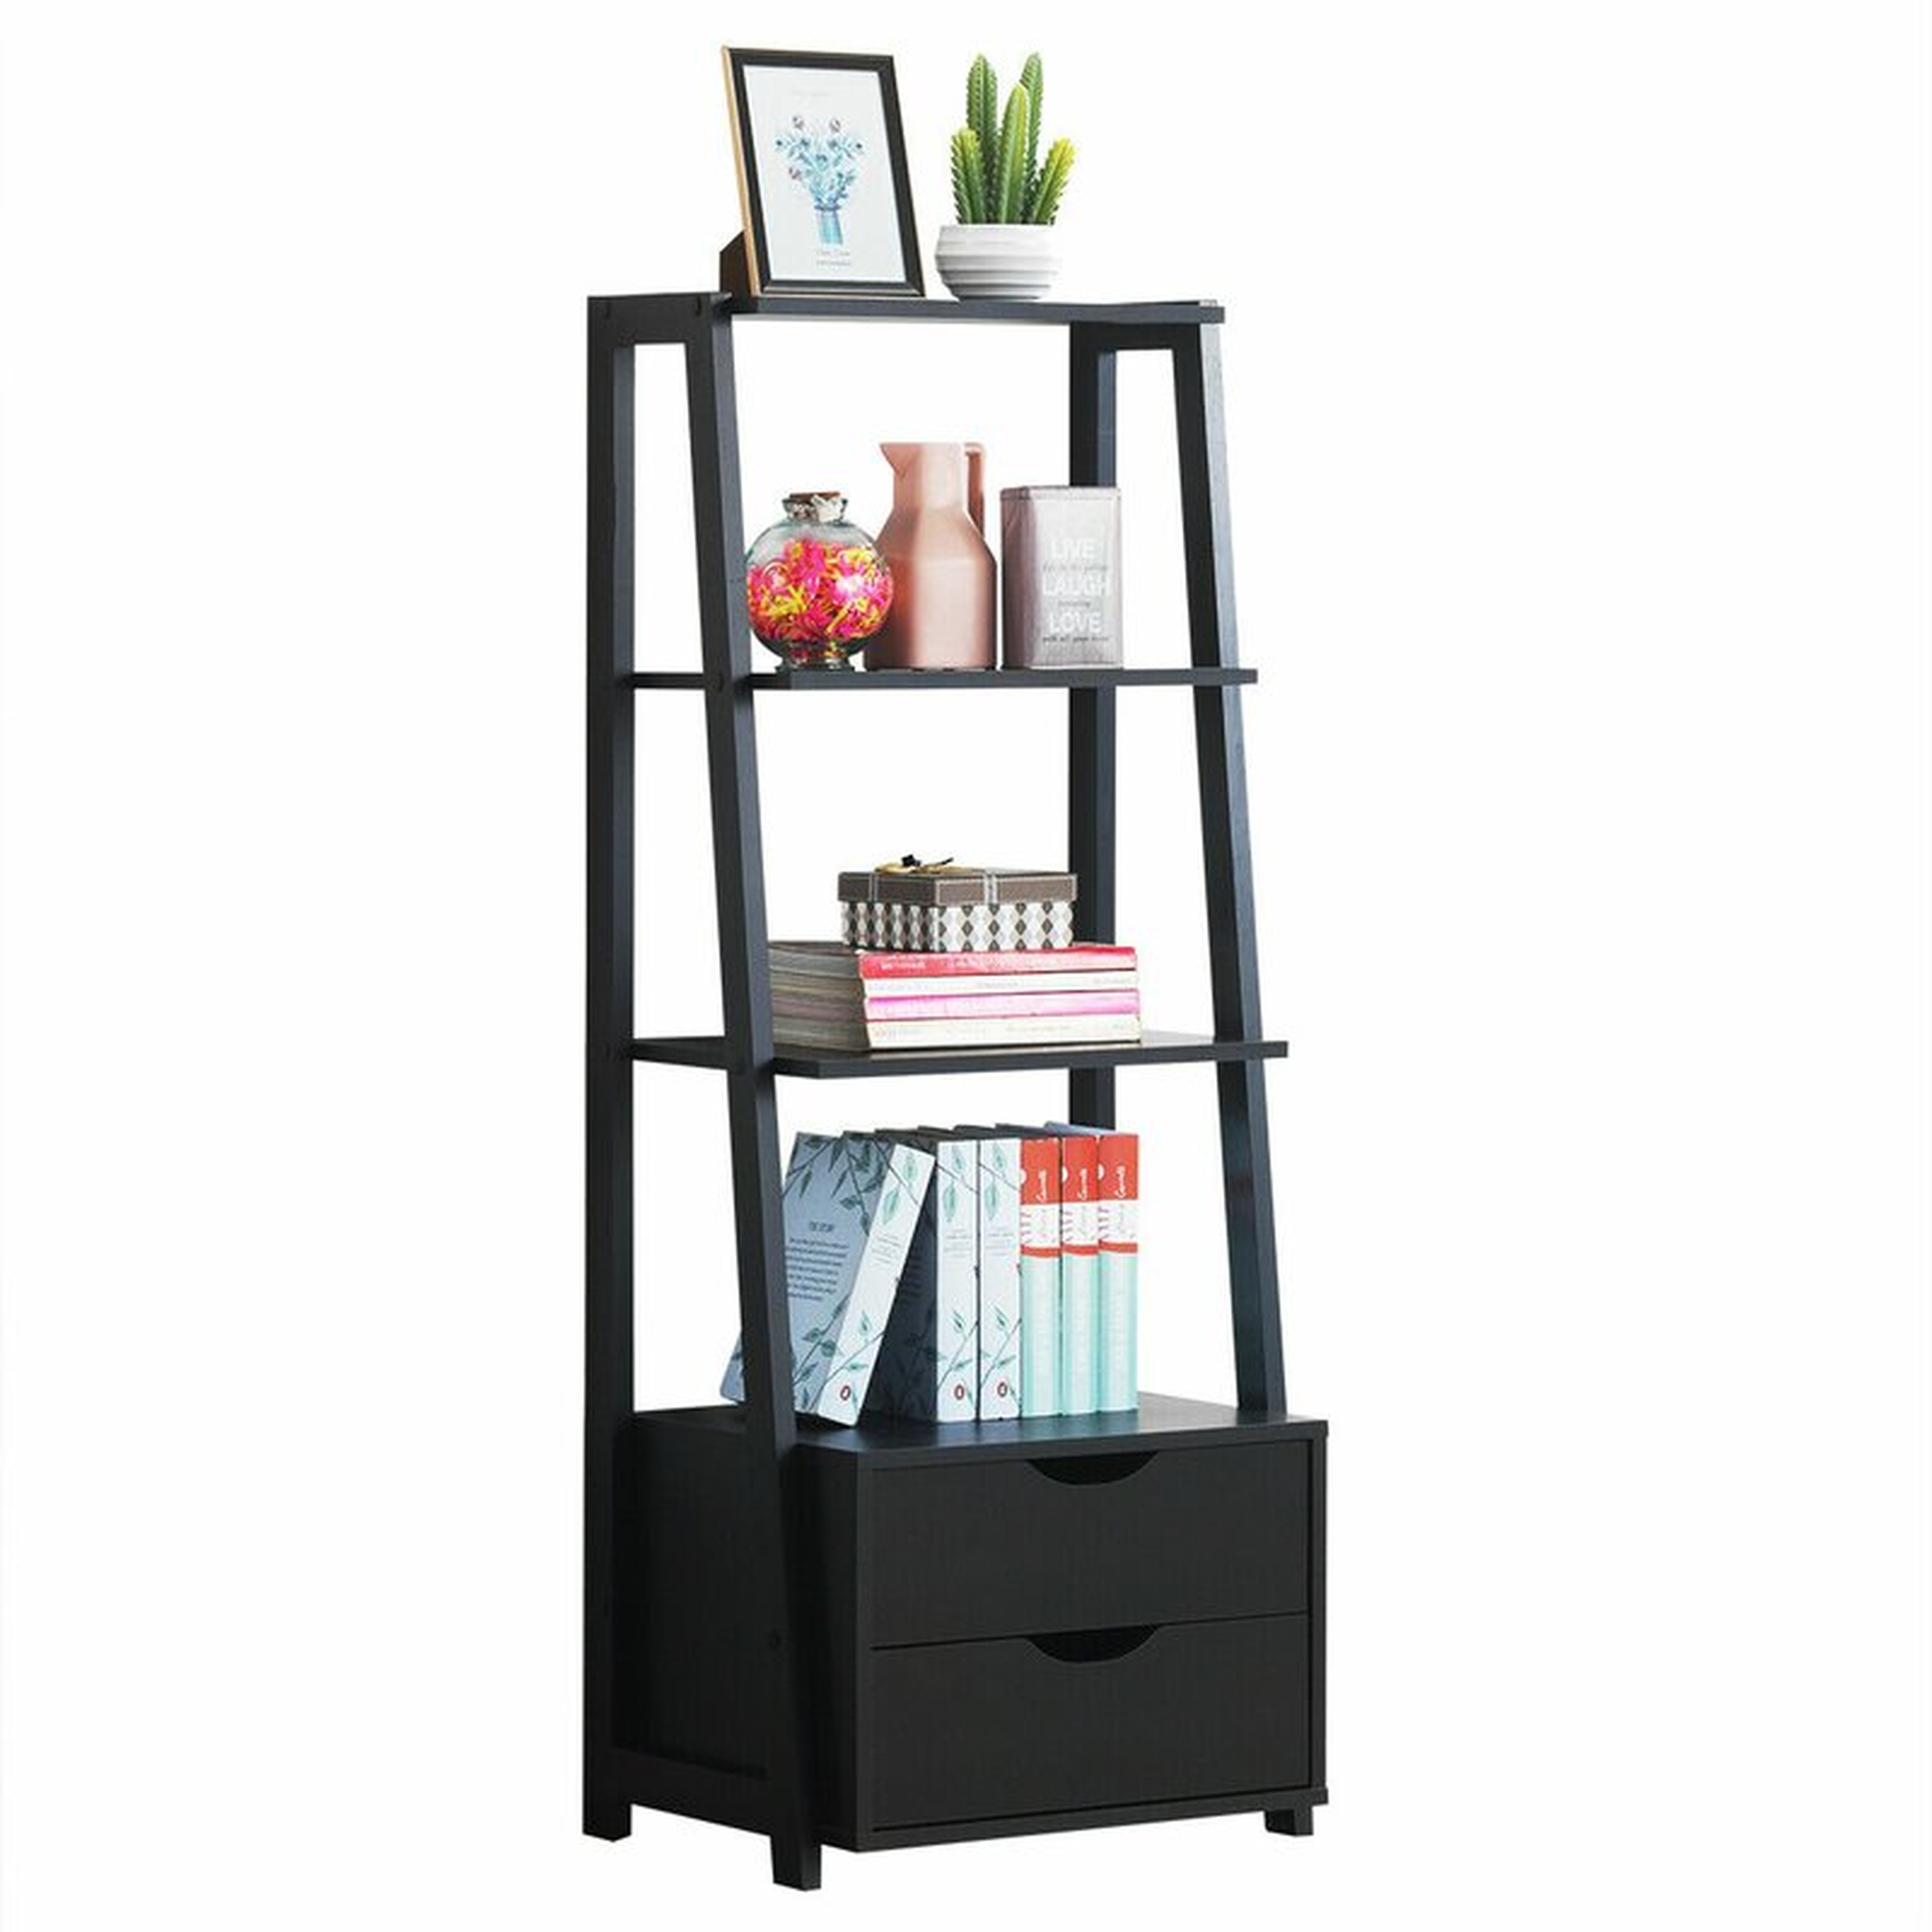 4-tier Ladder Shelf Bookshelf Bookcase Storage Display Leaning With 2 Drawers - Wayfair